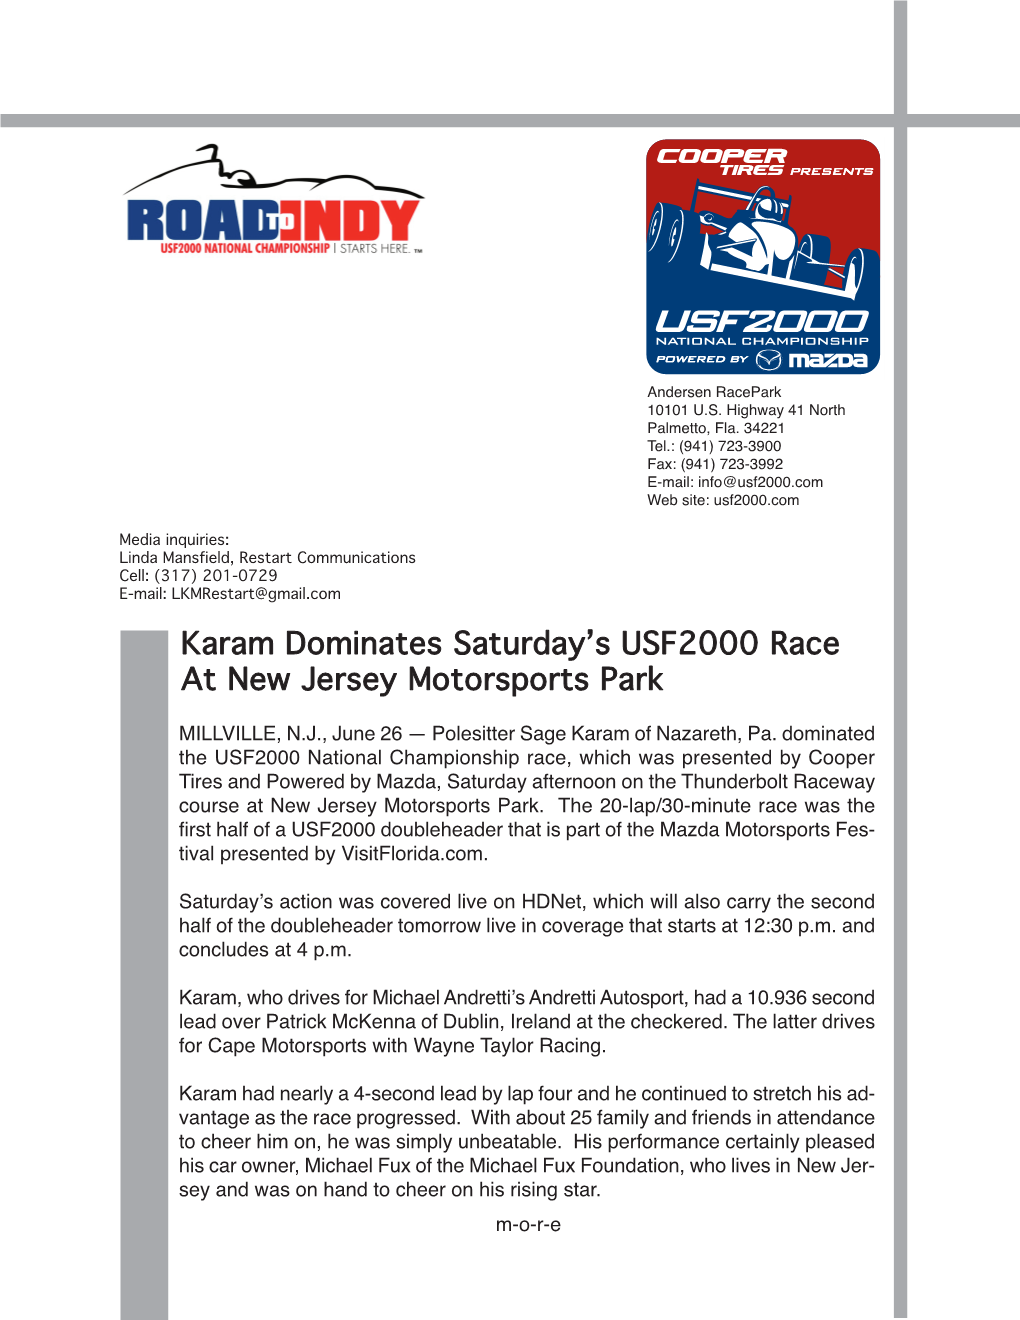 Karam Dominates Saturday's USF2000 Race at New Jersey